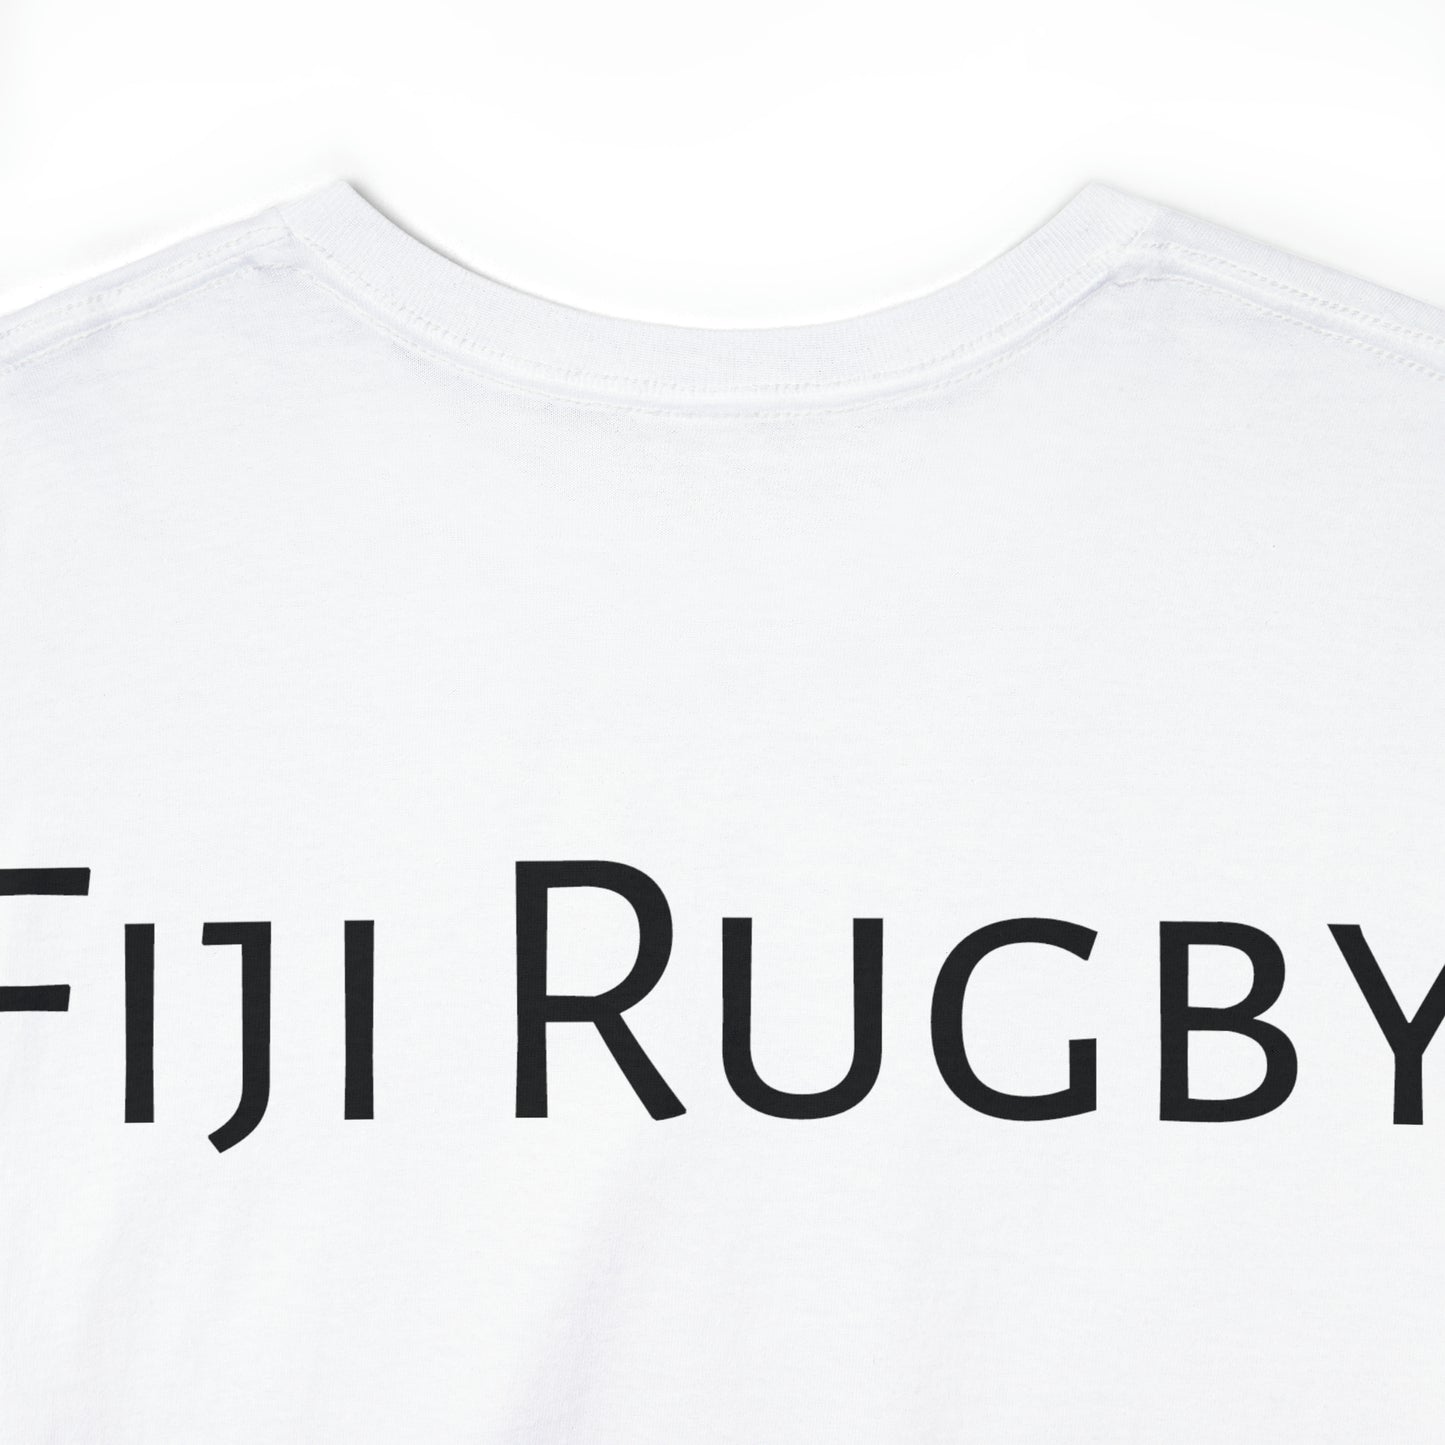 Ready Fiji - light shirts